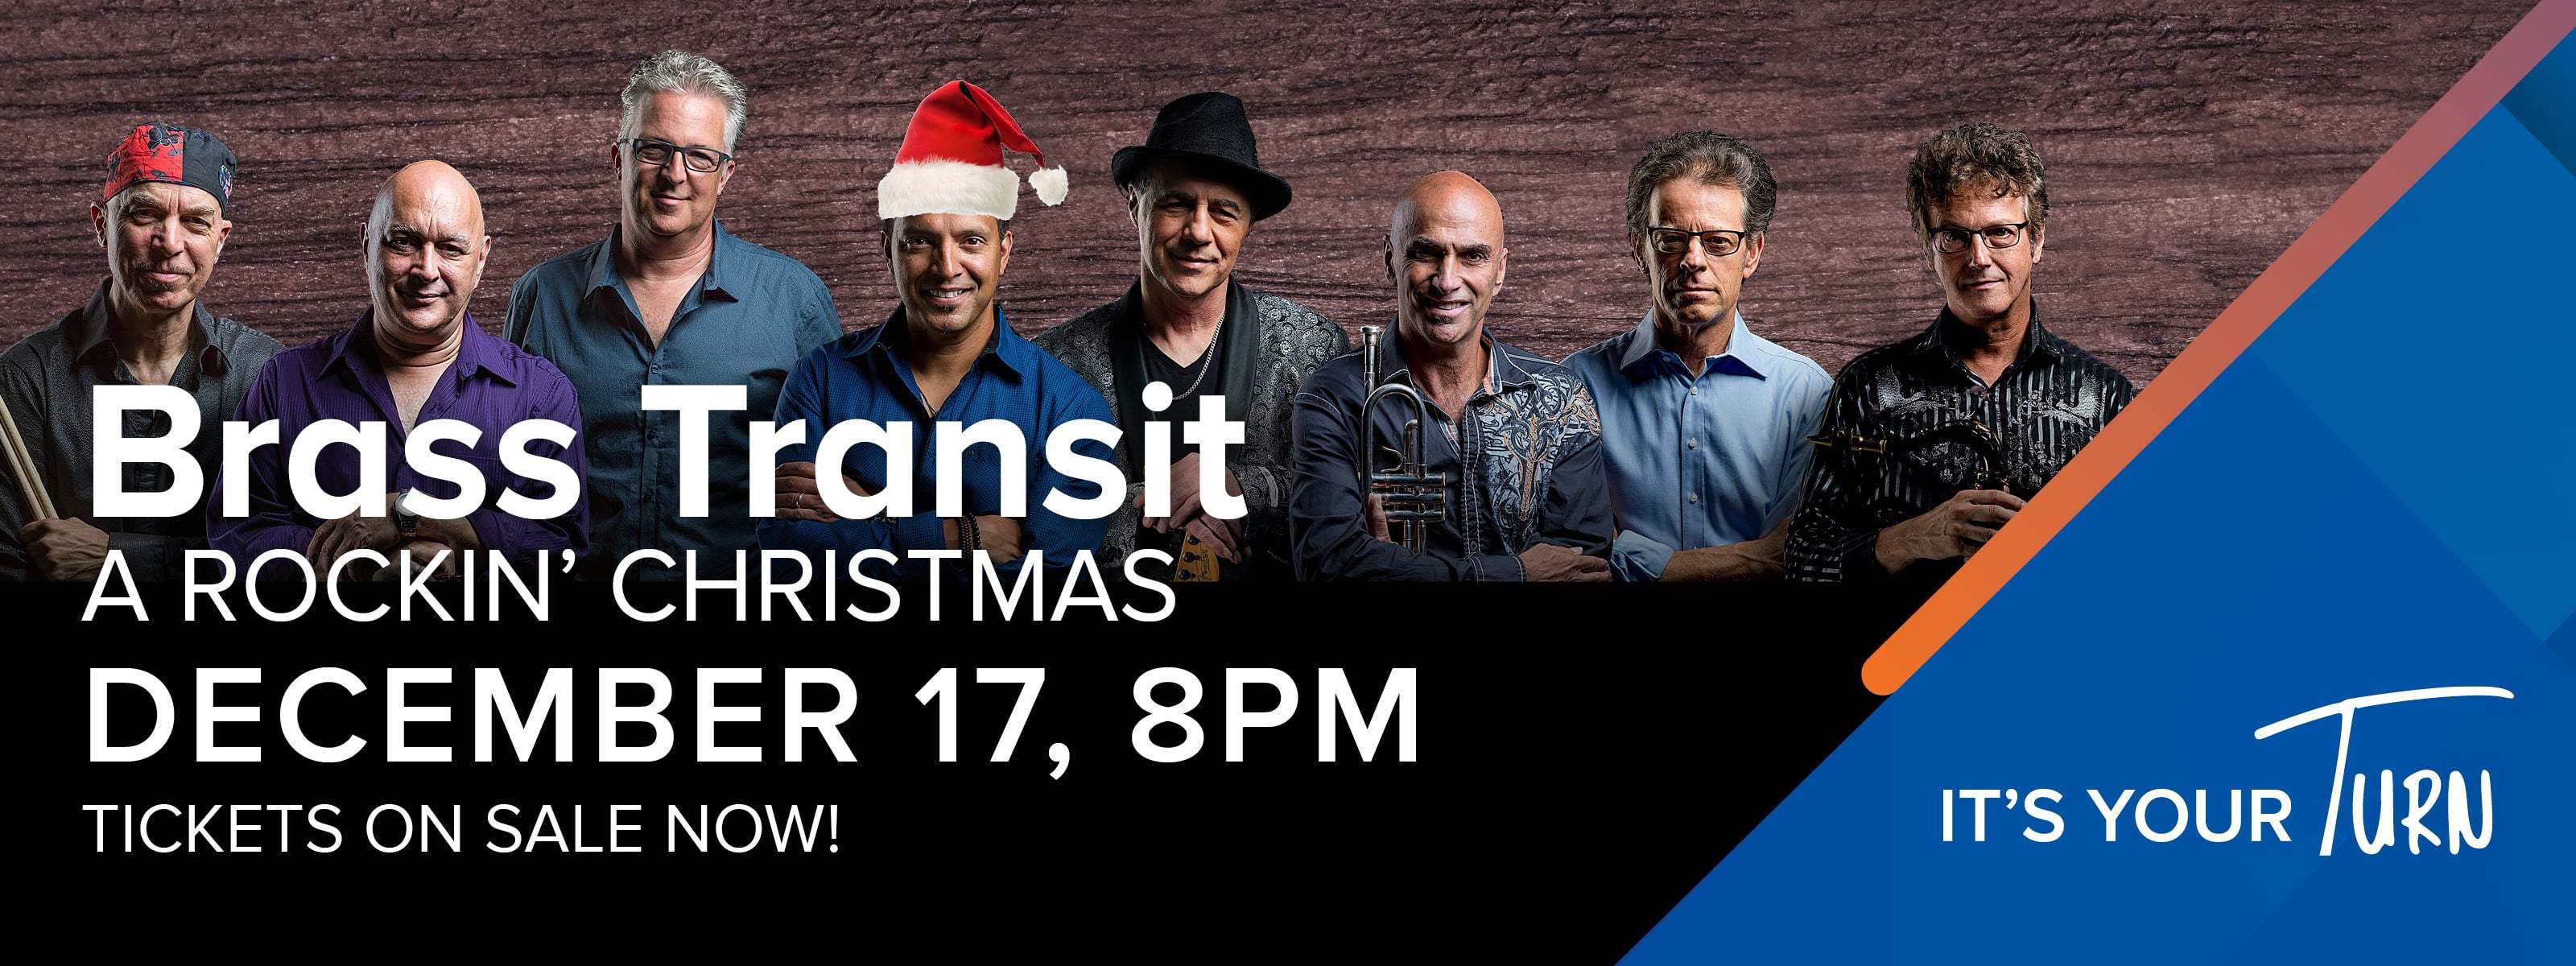 Brass Transit A Rockin Christmas Dec 17 8pm Tickets On Sale Now